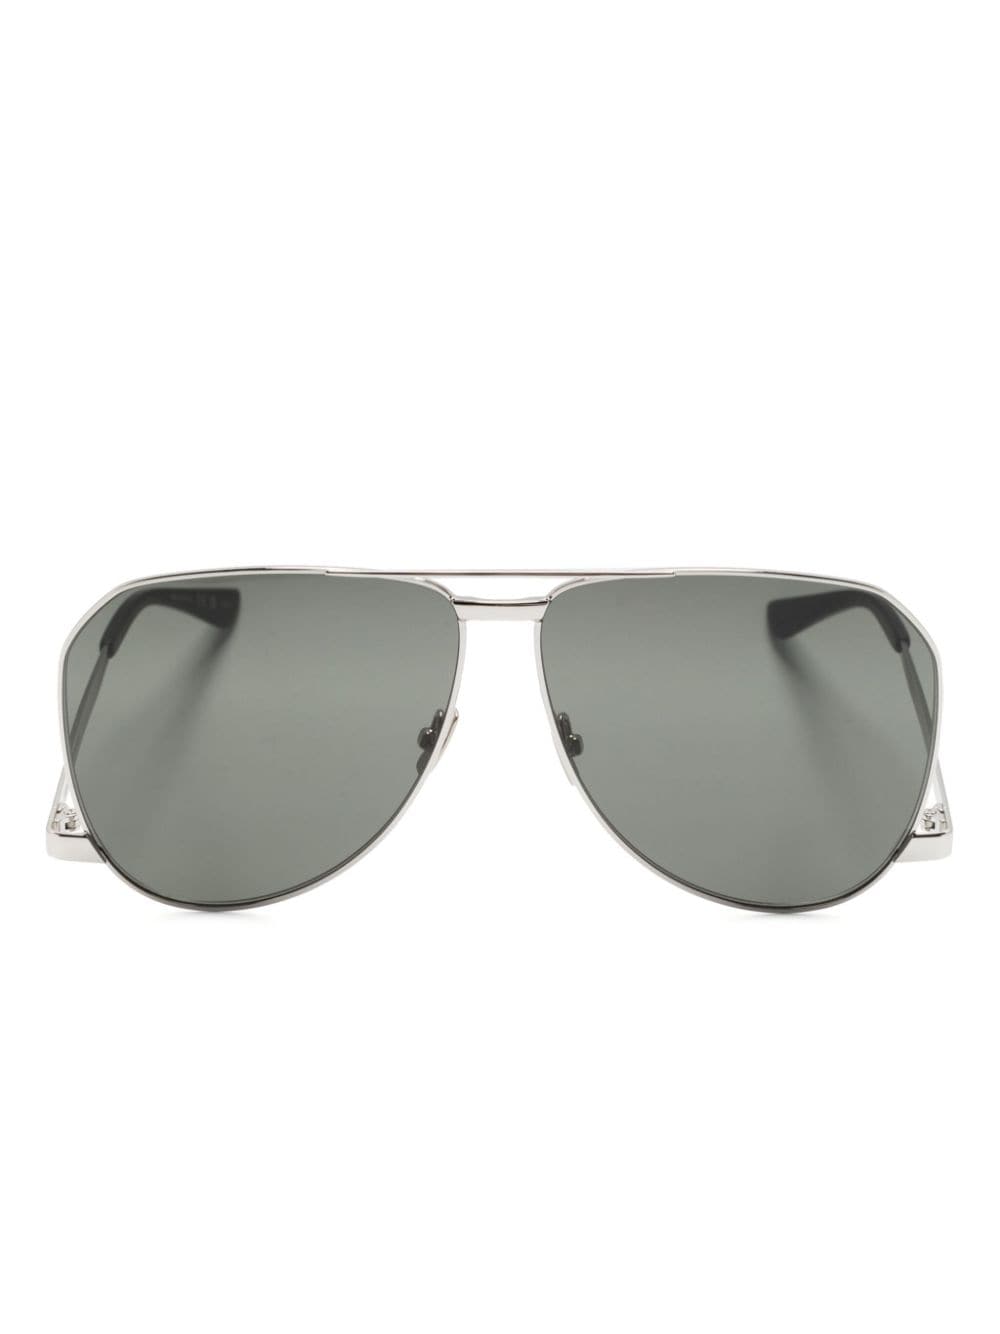 Saint Laurent Eyewear SL 690 pilot-frame sunglasses - Silver von Saint Laurent Eyewear